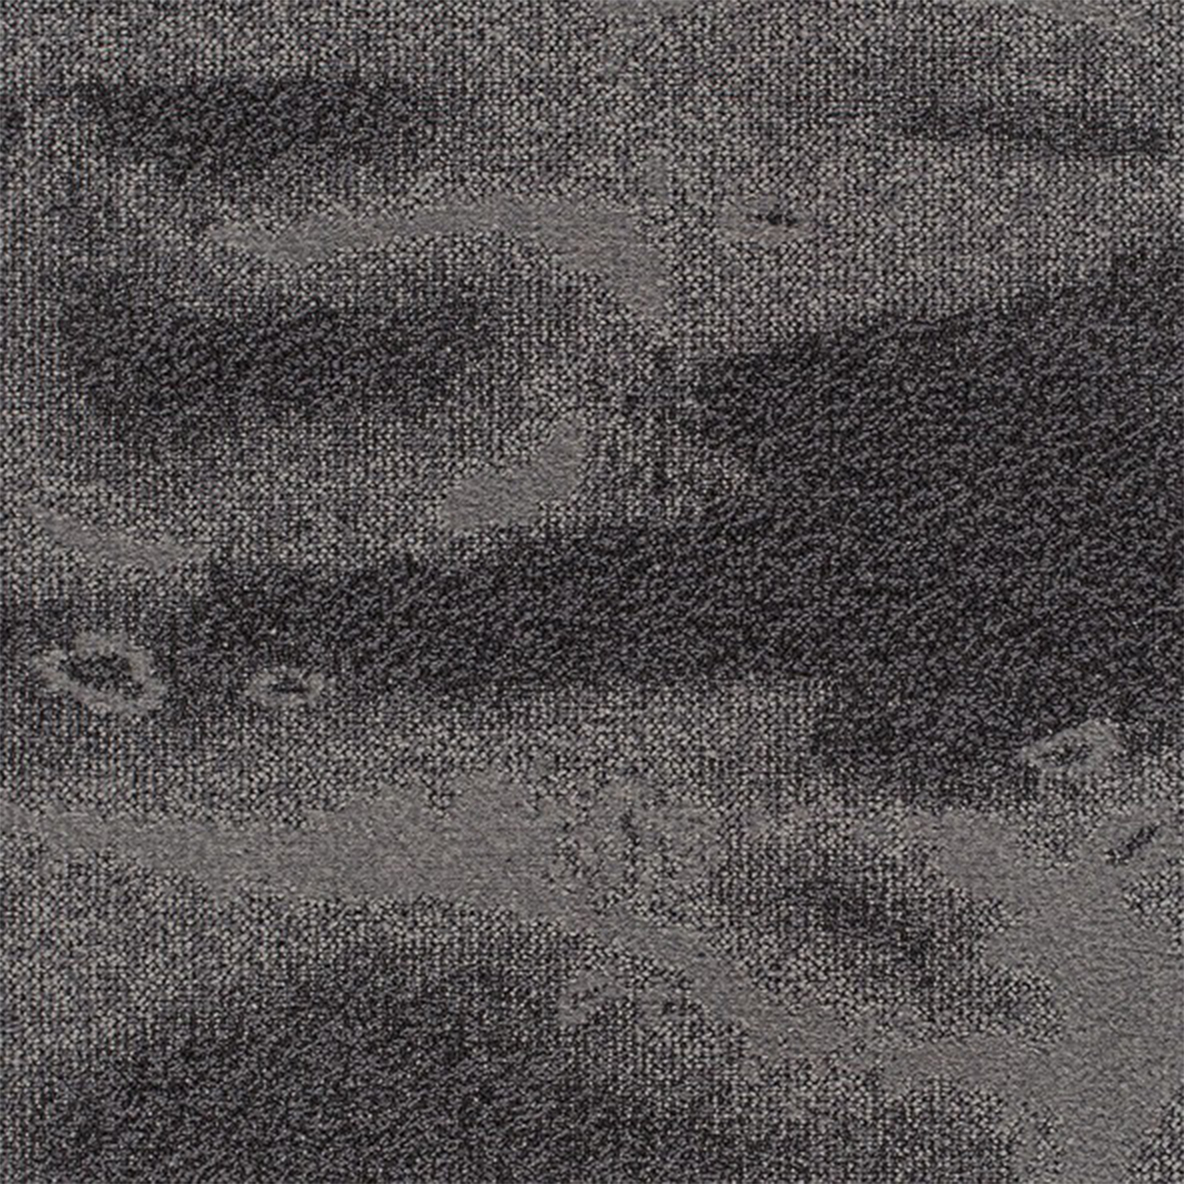 Oil and Water Commercial Carpet Tiles .32 Inch x 50x50 cm per Tile Graphite color close up